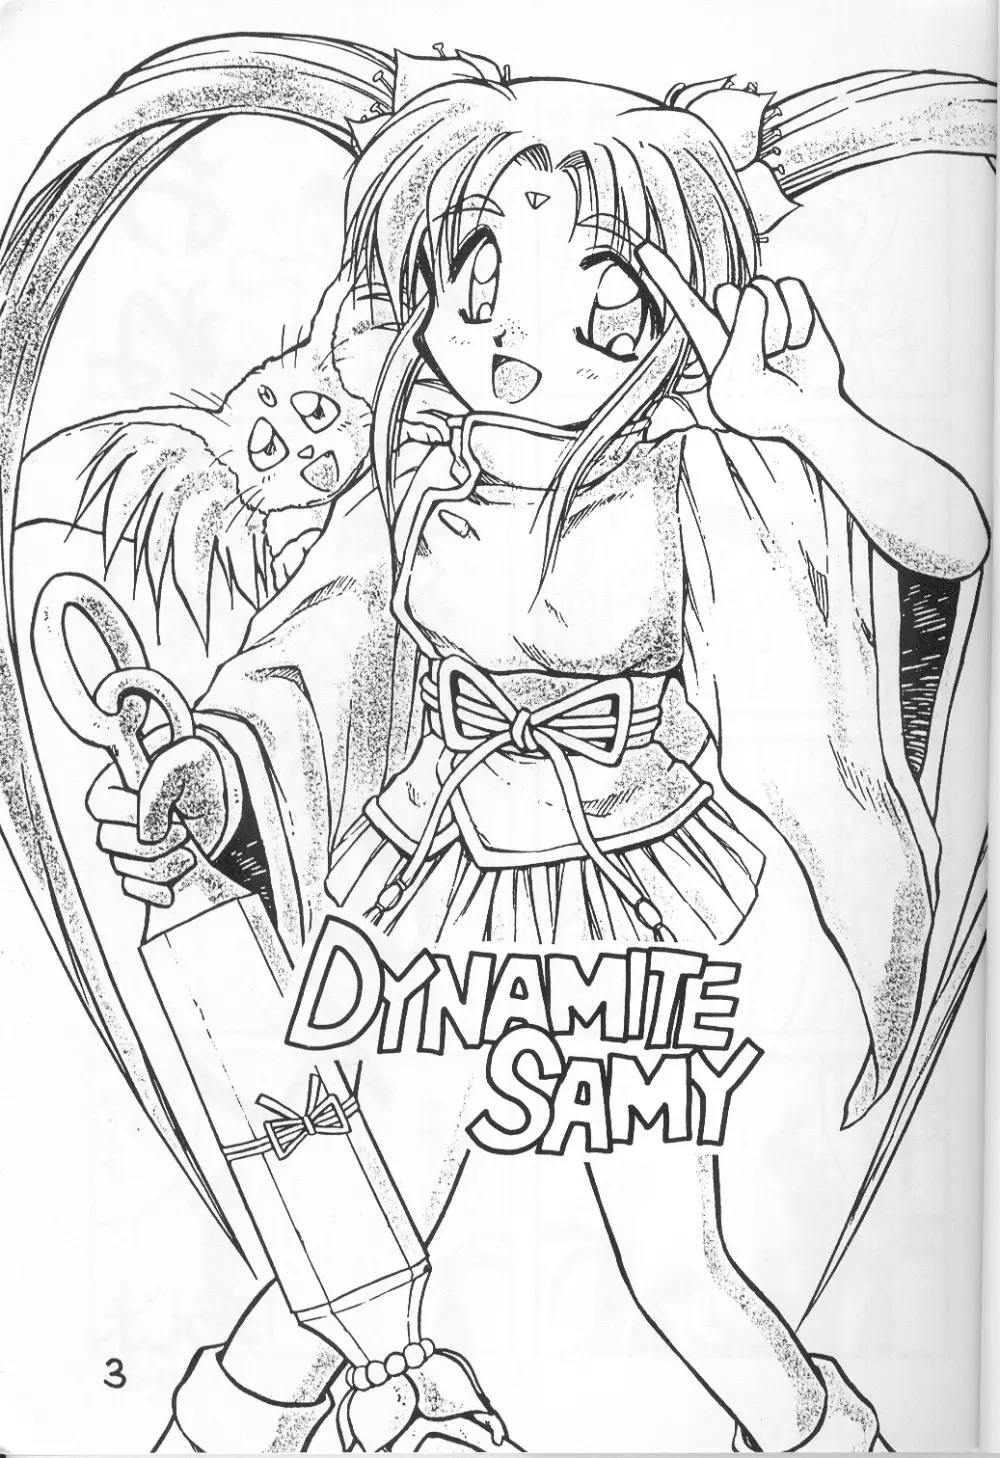 Dynamite Samy 1 Page.2